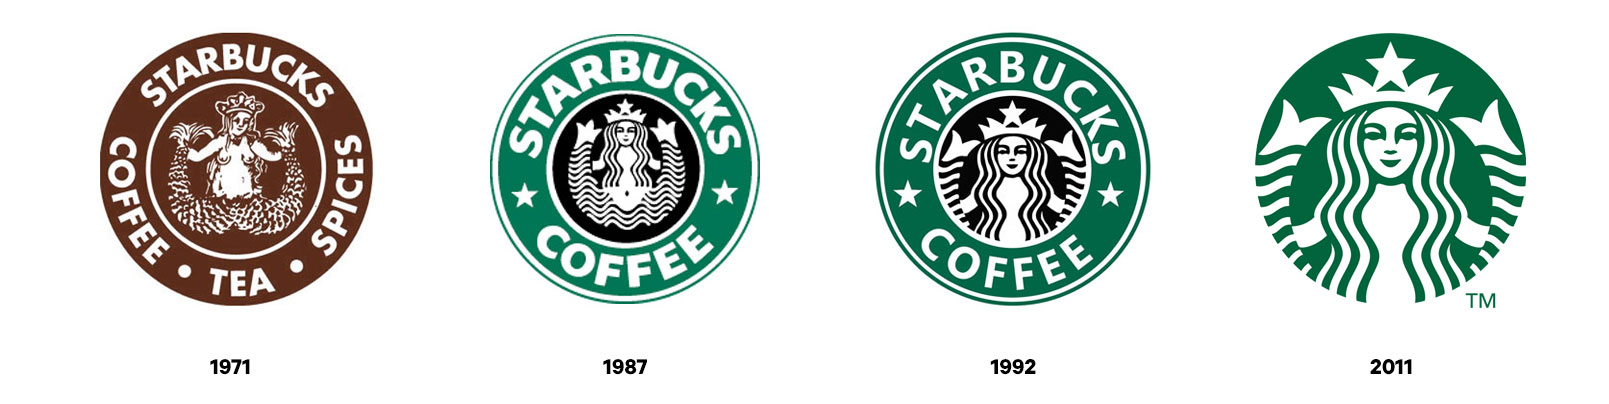 Starbucks-evolution